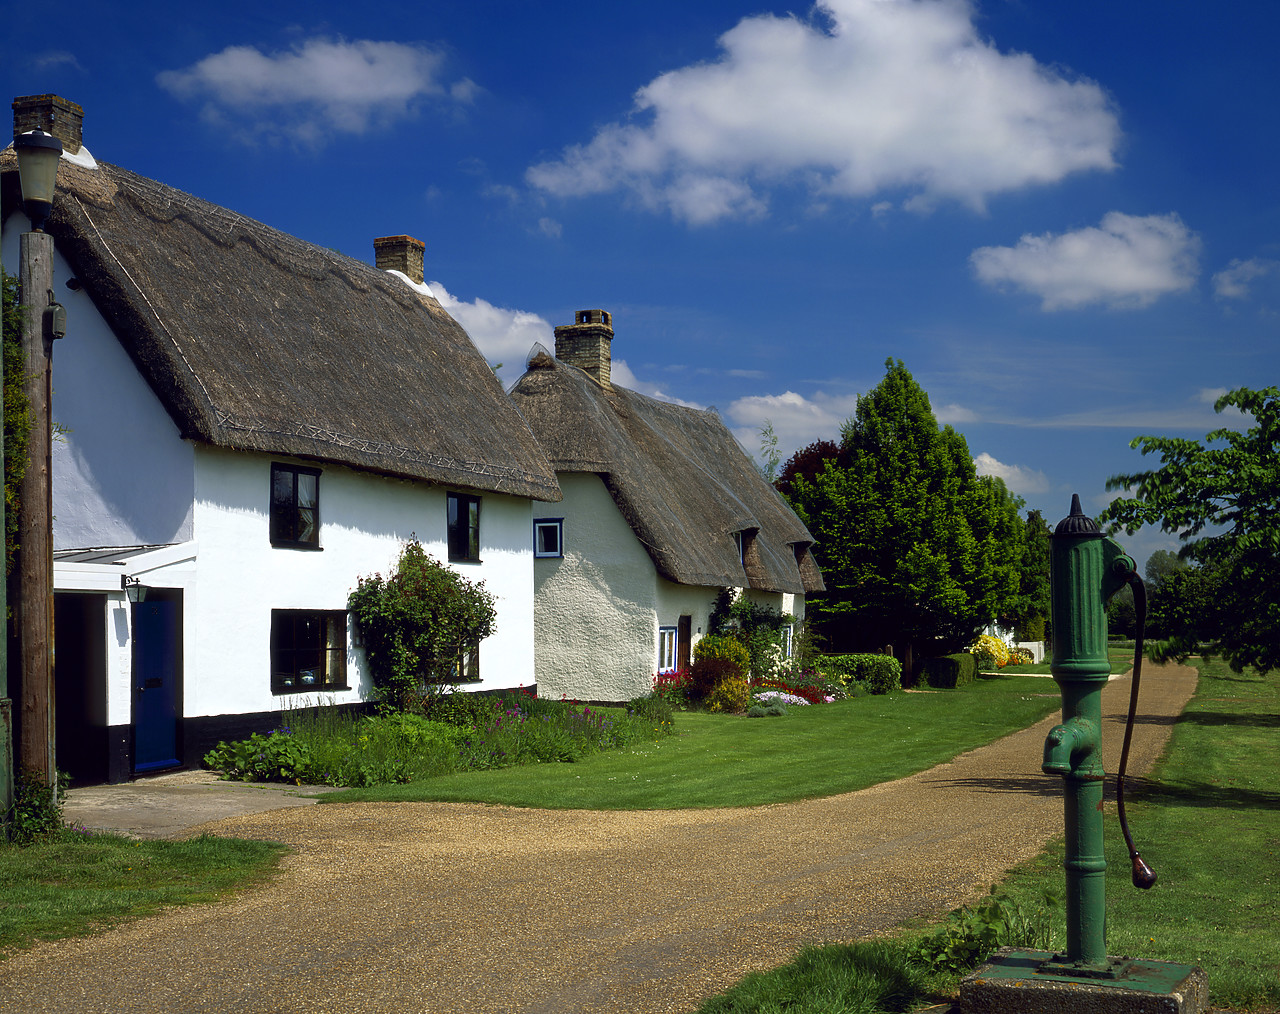 #050129-4 - Thatched Cottages, Barrington, Cambridgeshire, England